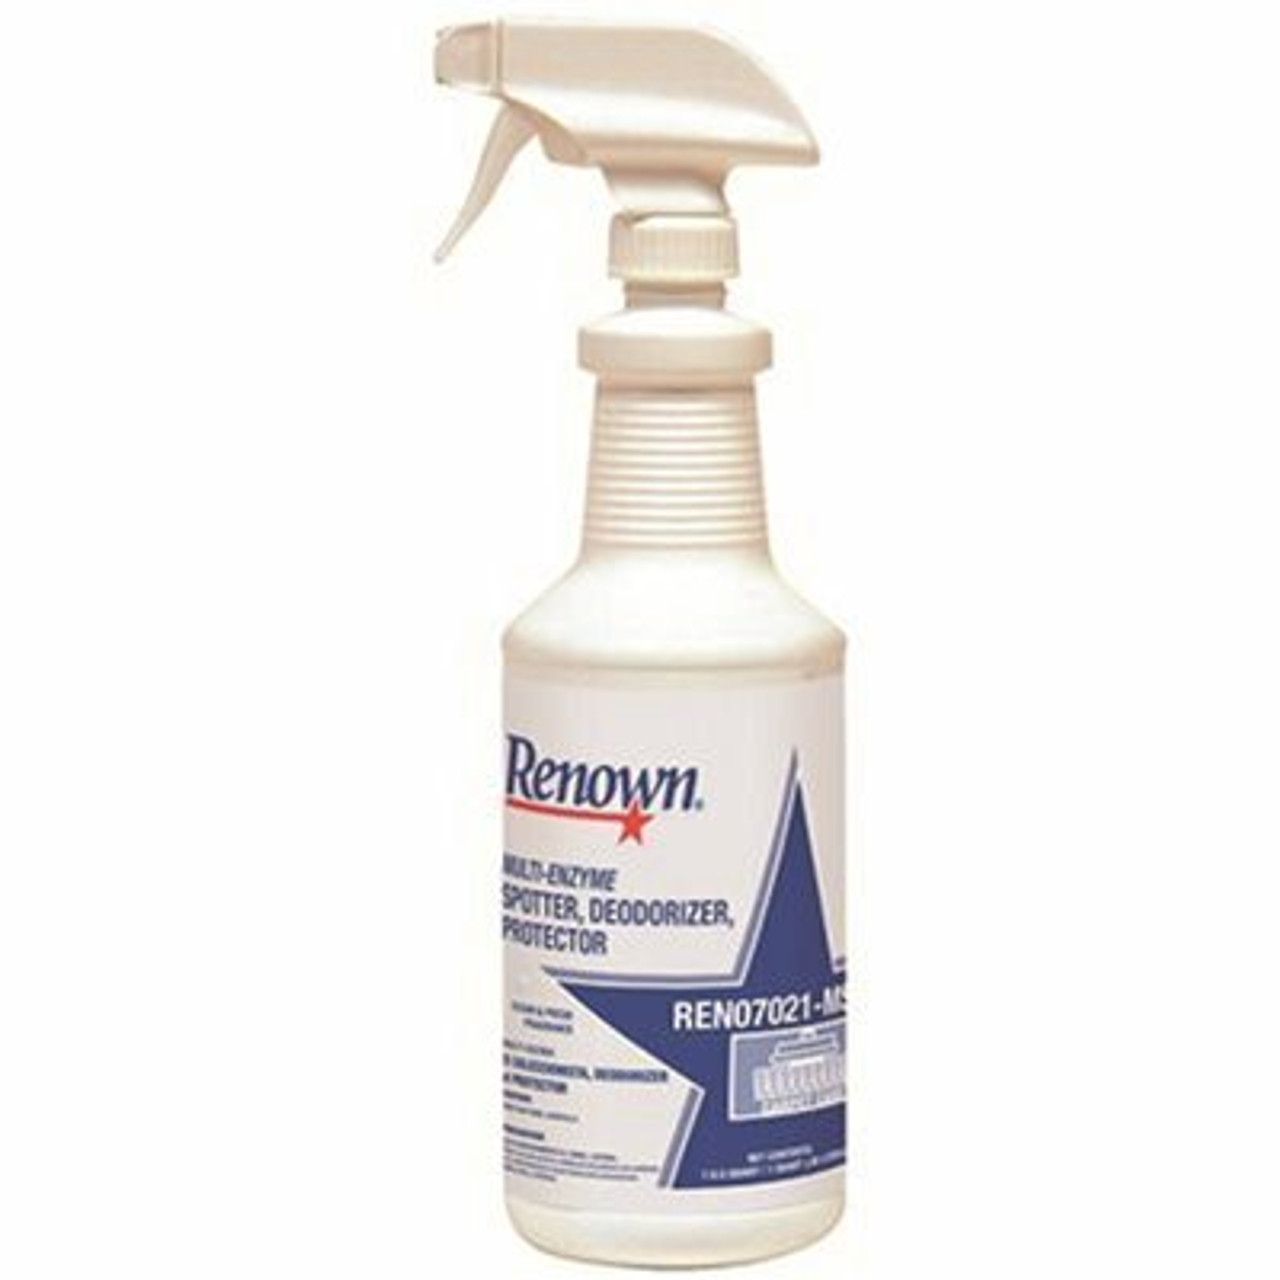 Renown 1 Qt. Multi-Enzyme Spotter Deodorant Fresh Scent